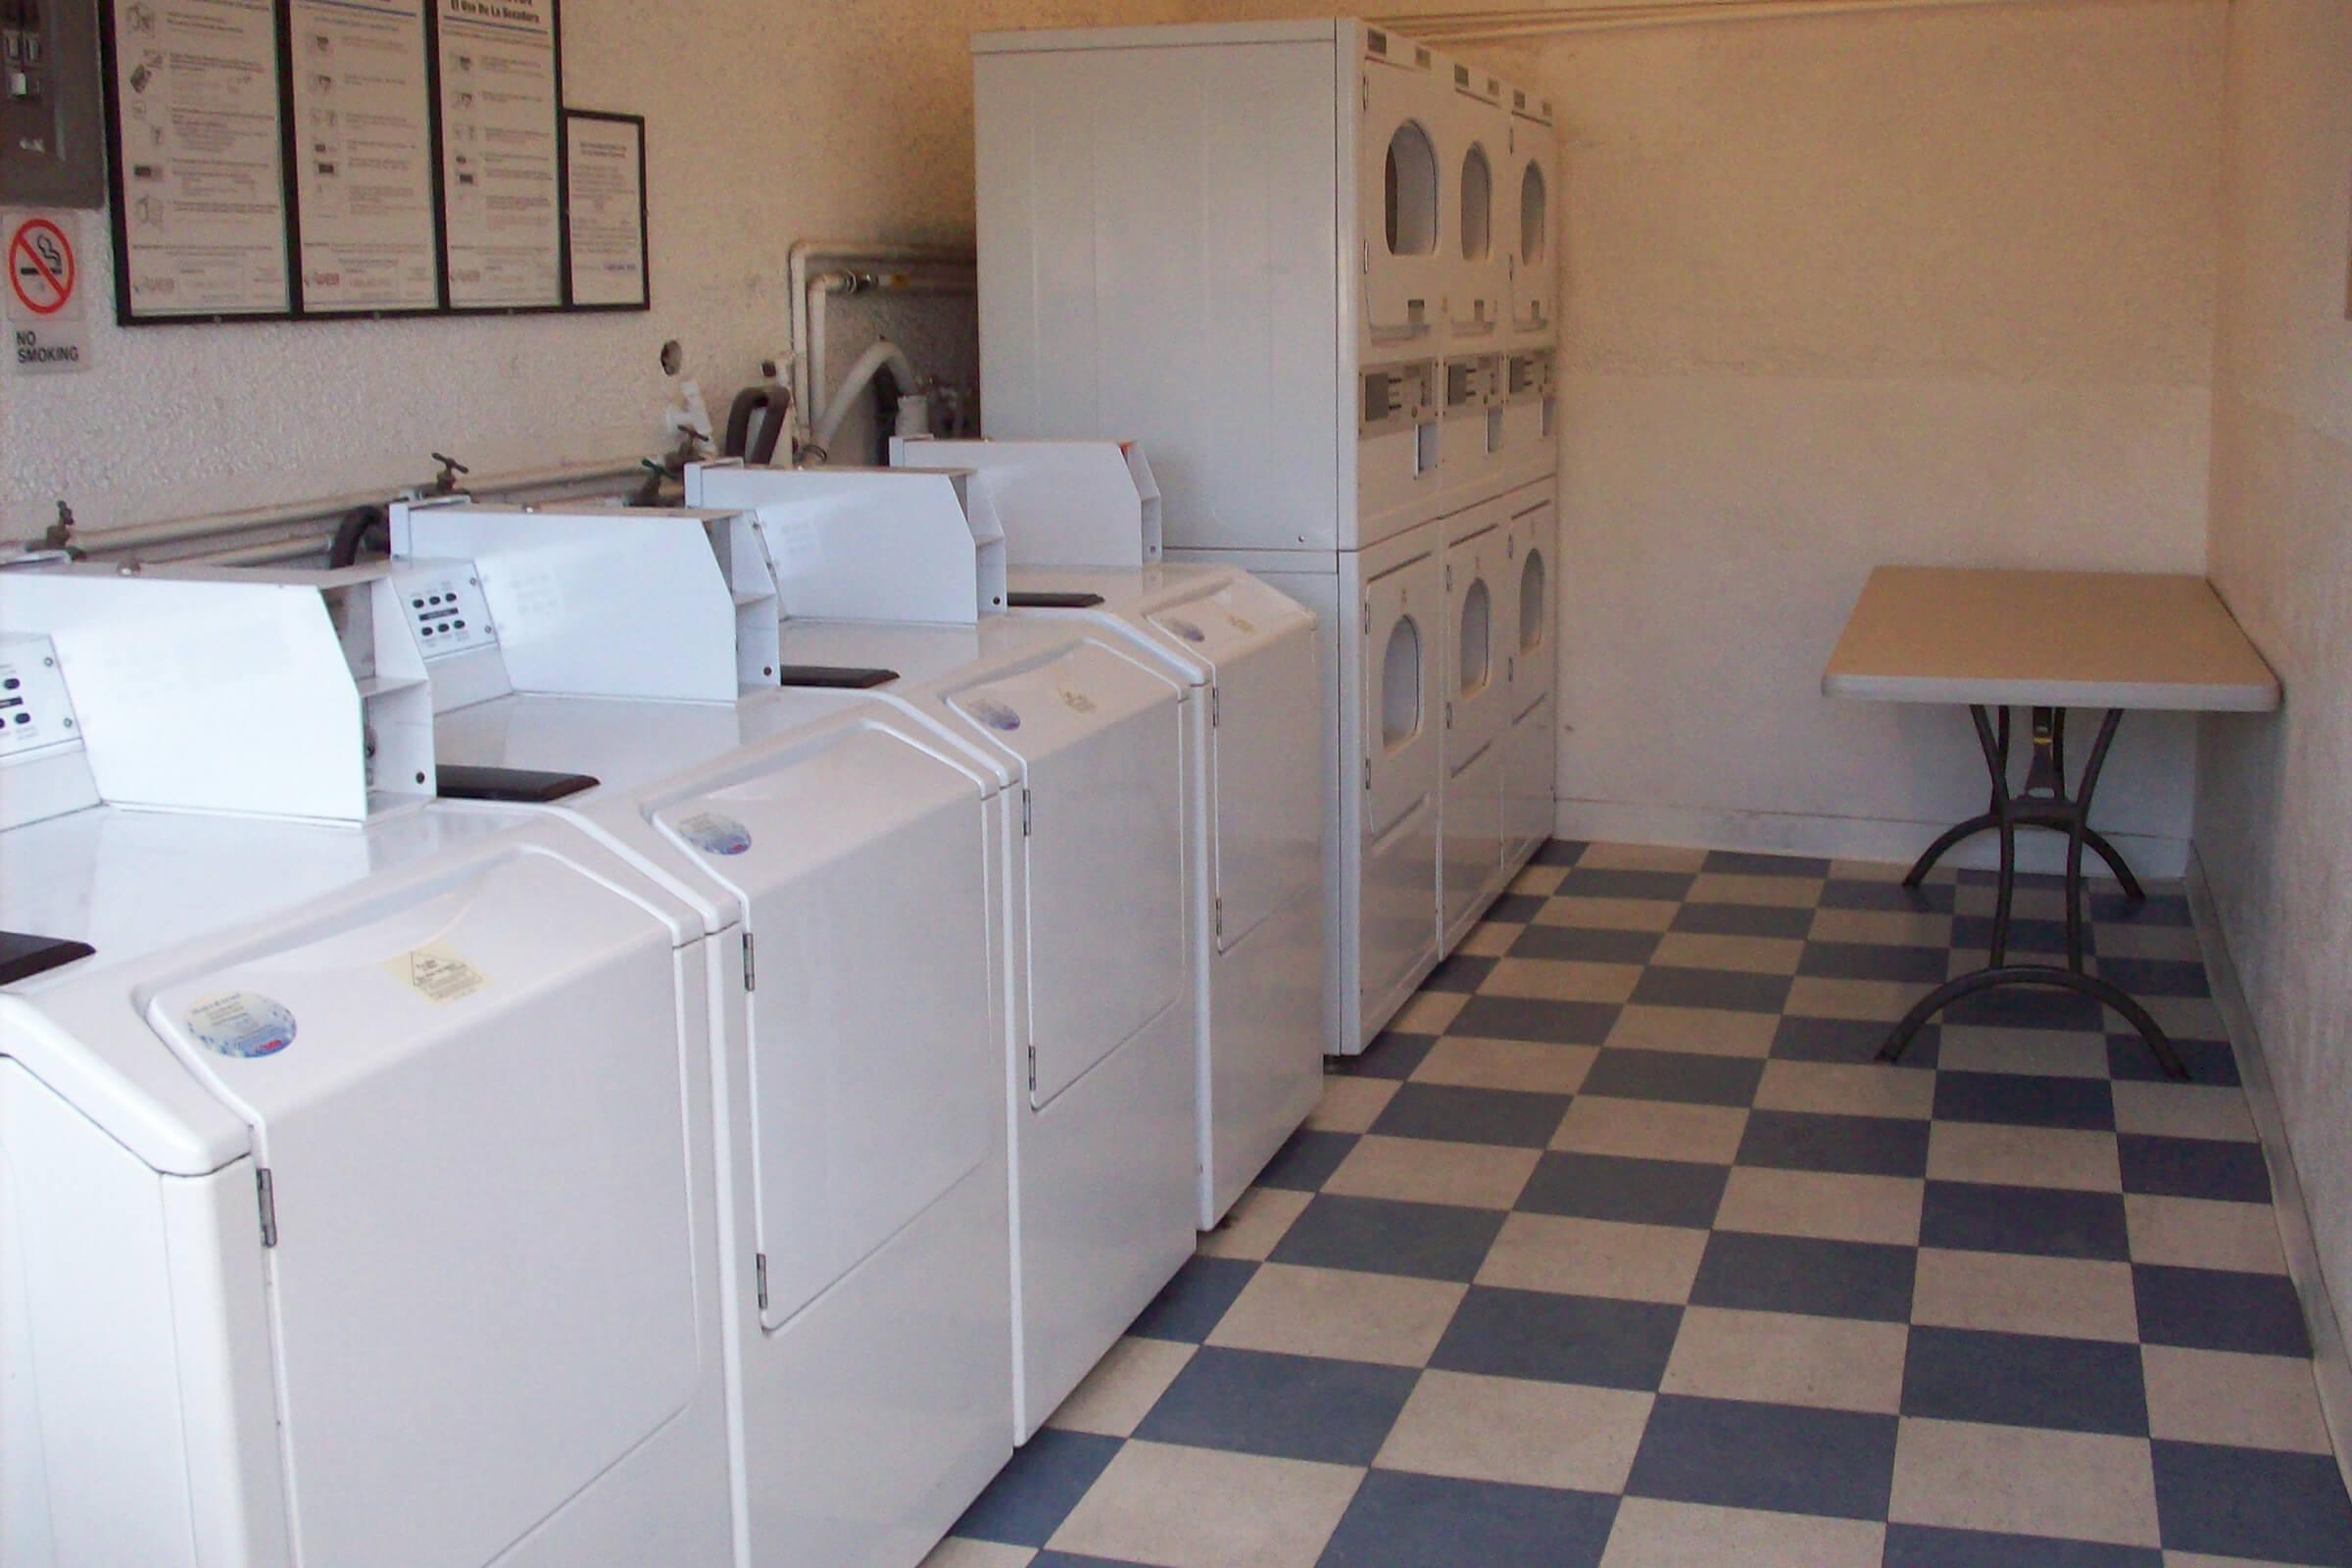 Washer and dryers in Kona Kai Apartments community laundry